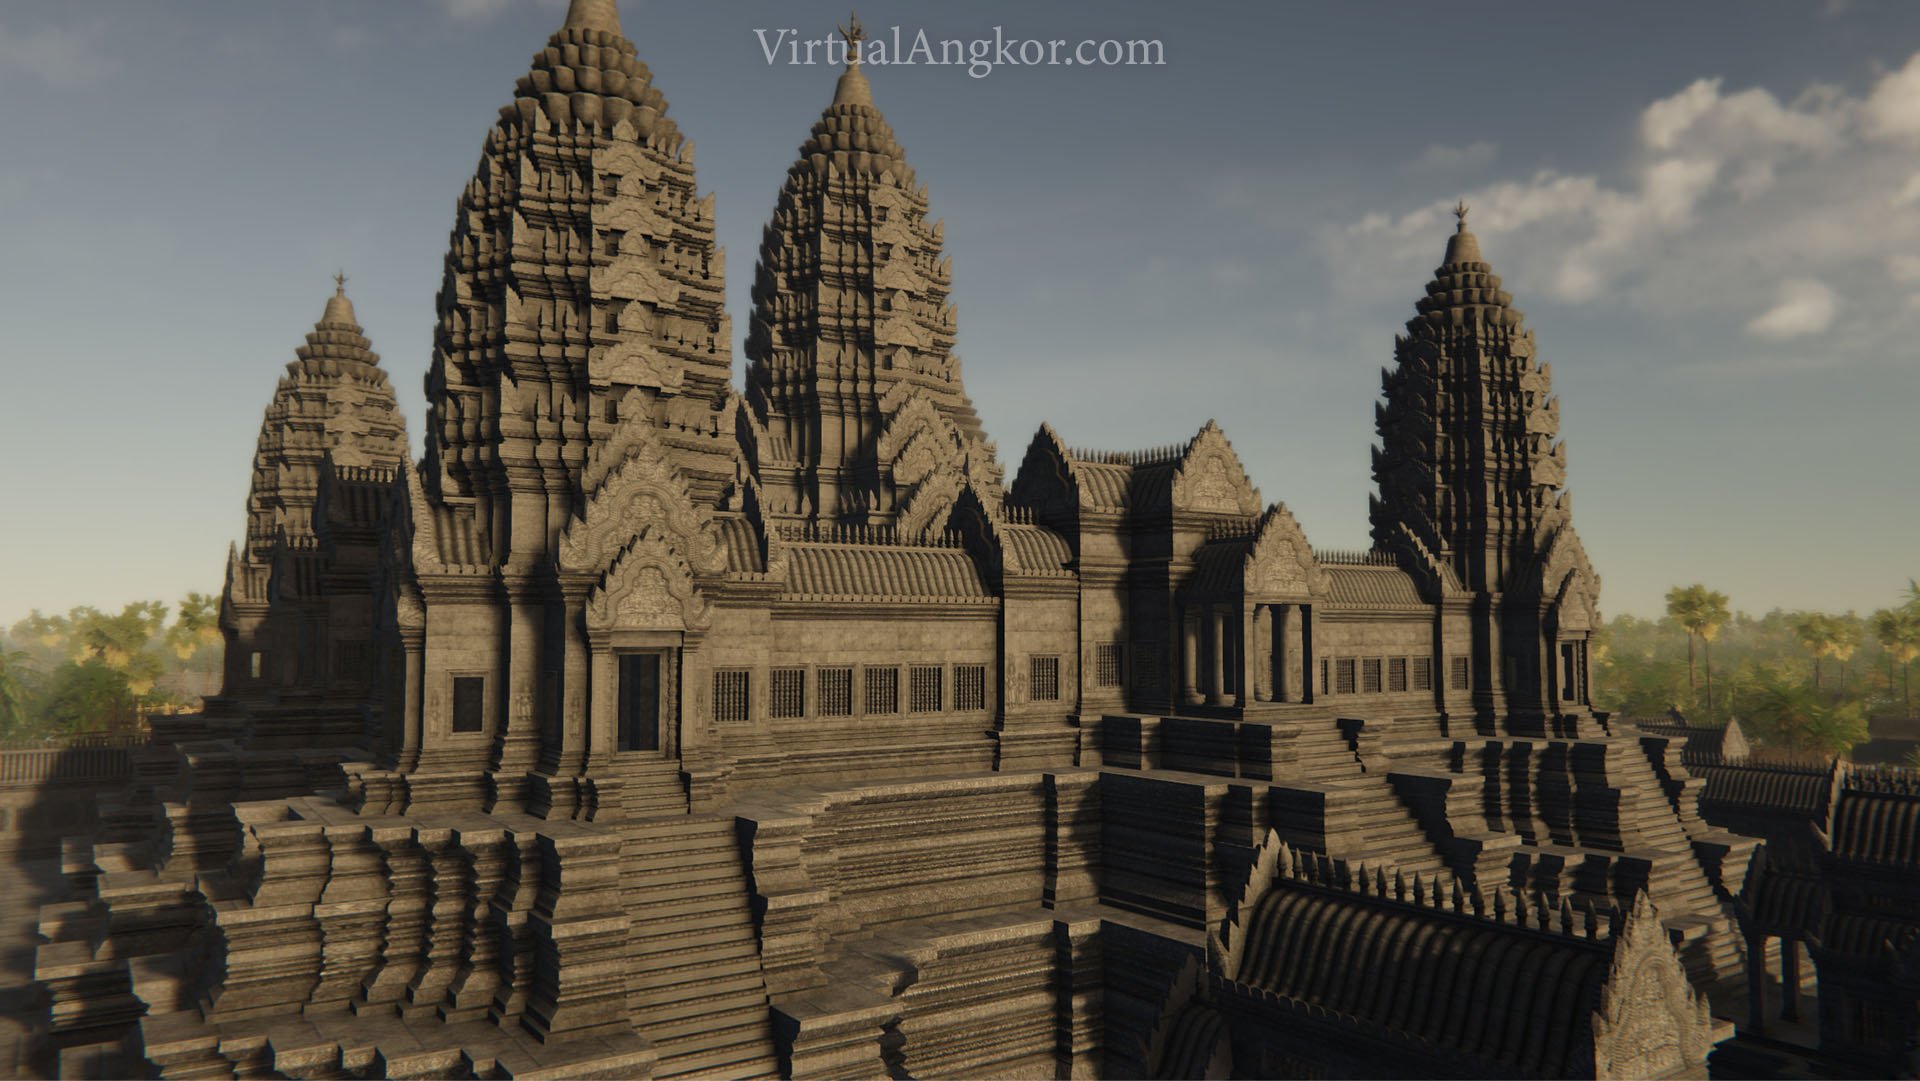 Angkor Wat sandstone